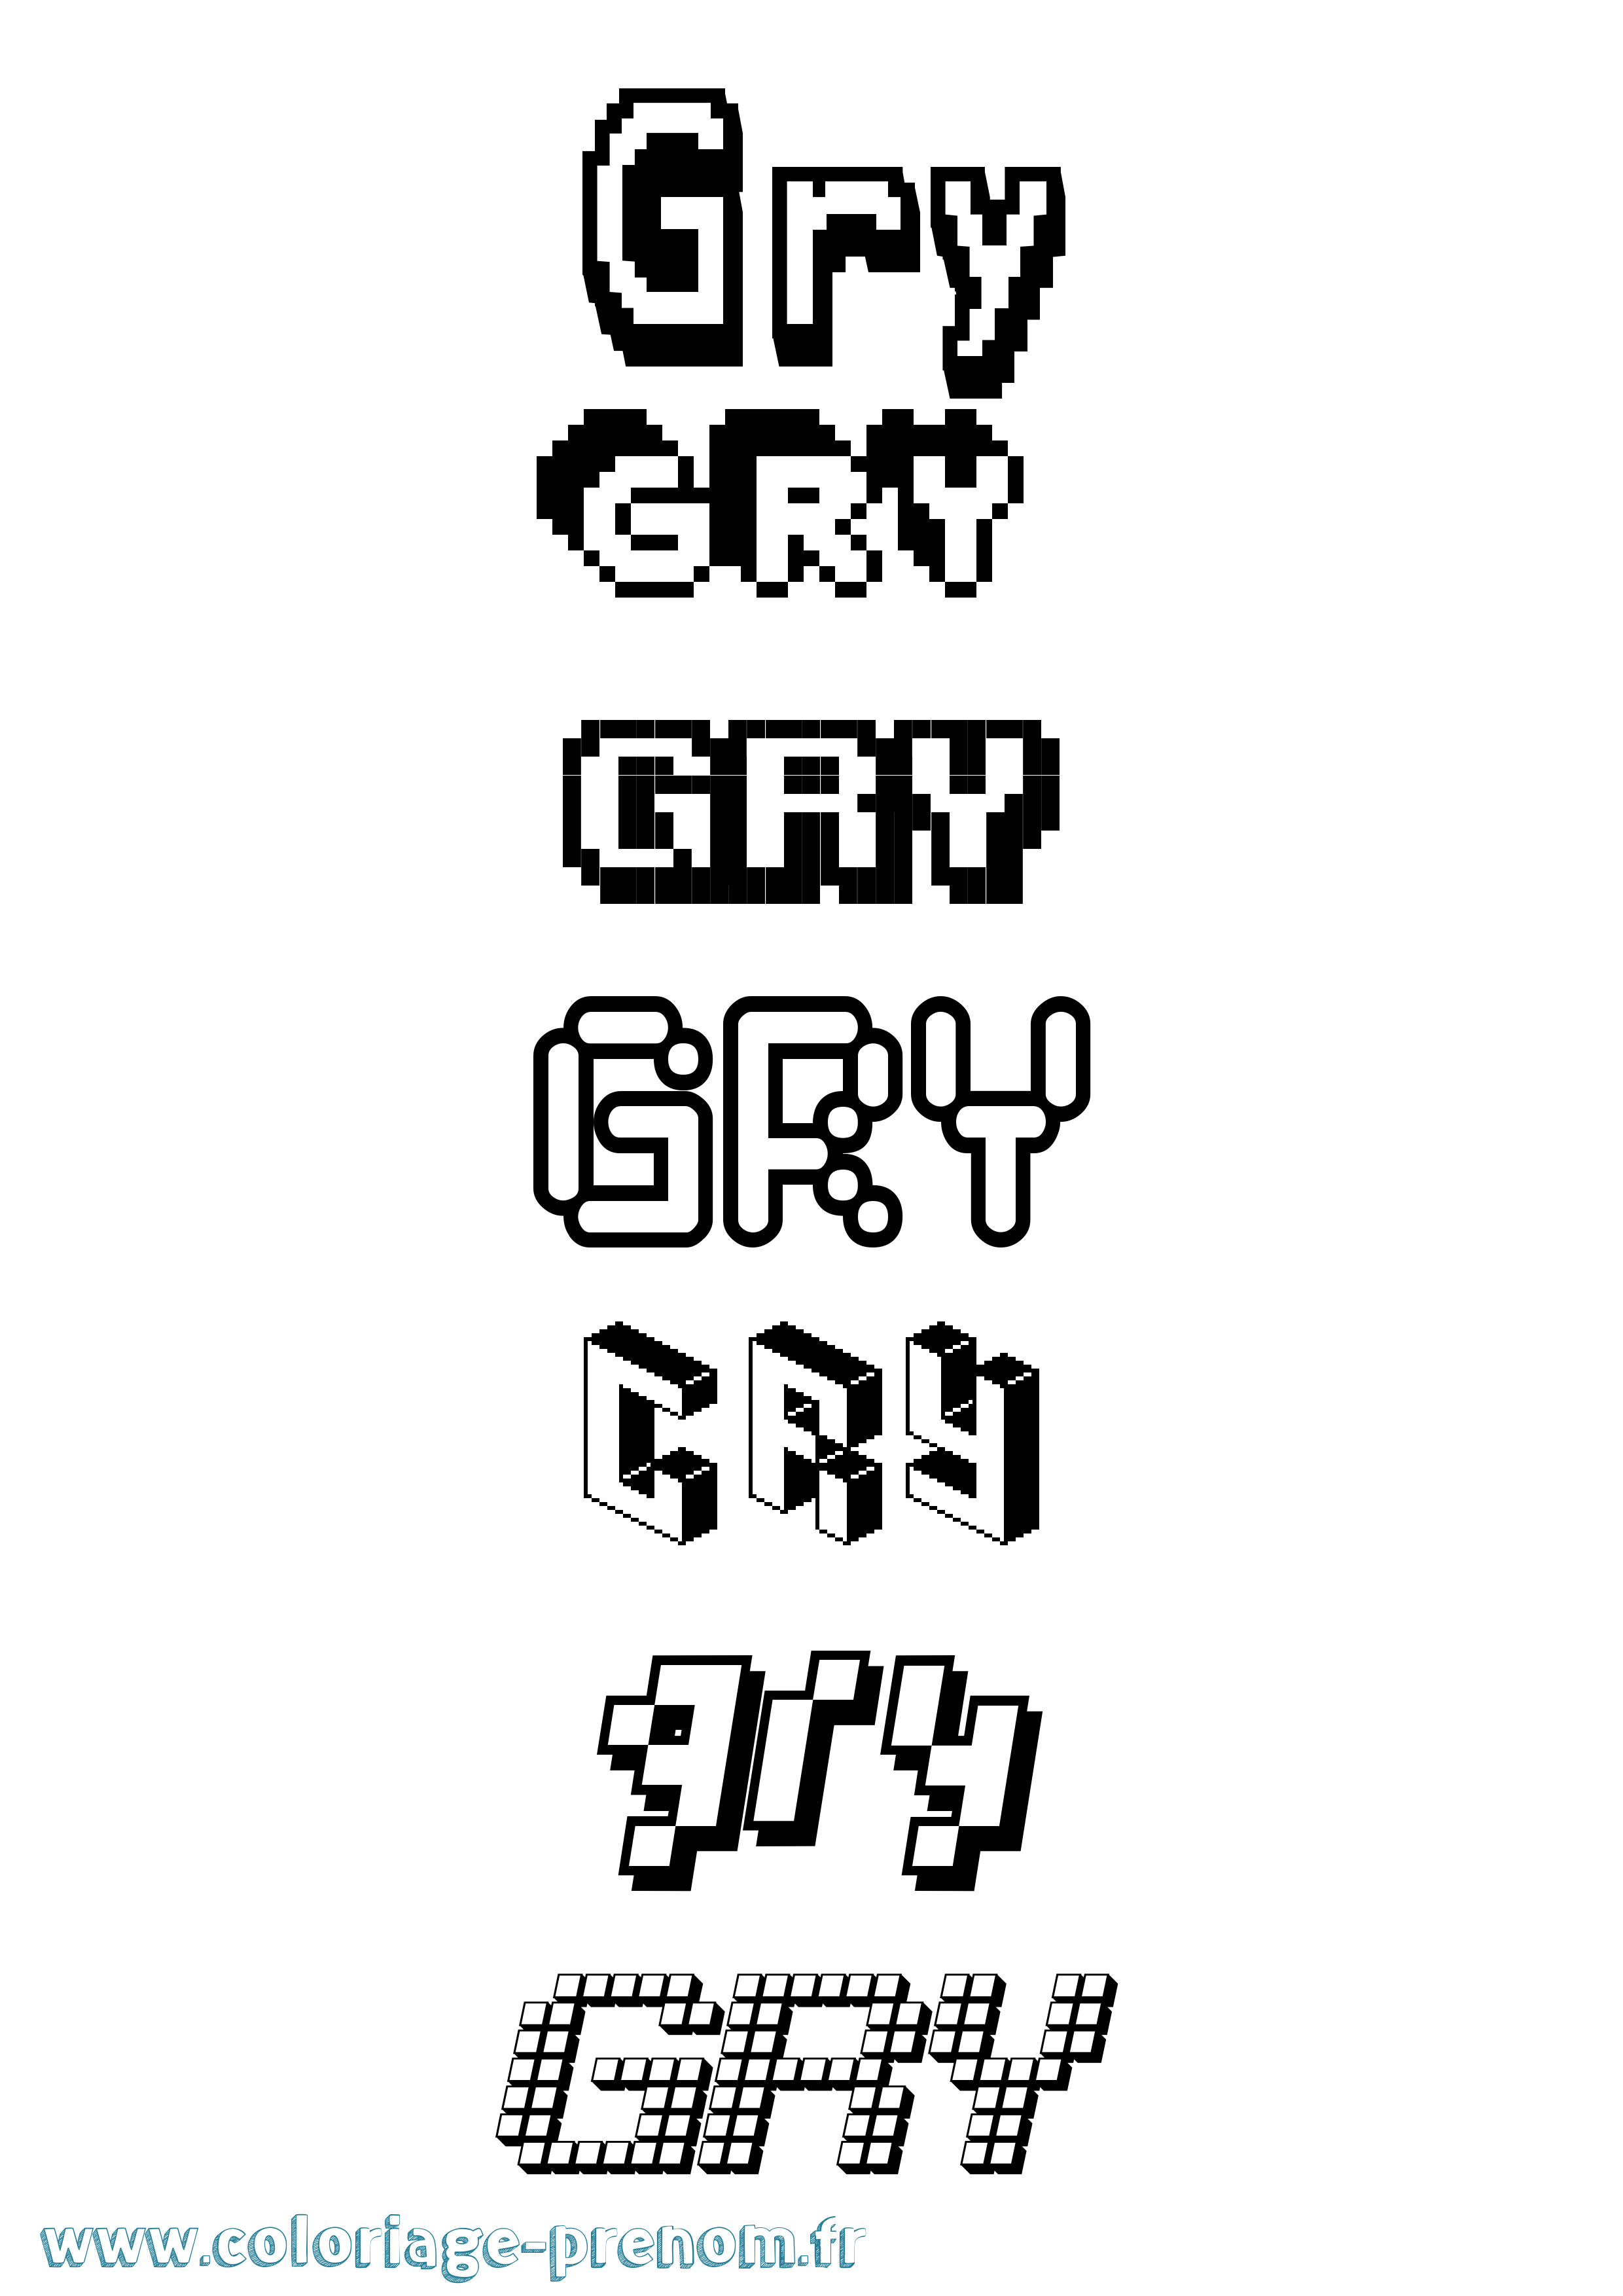 Coloriage prénom Gry Pixel